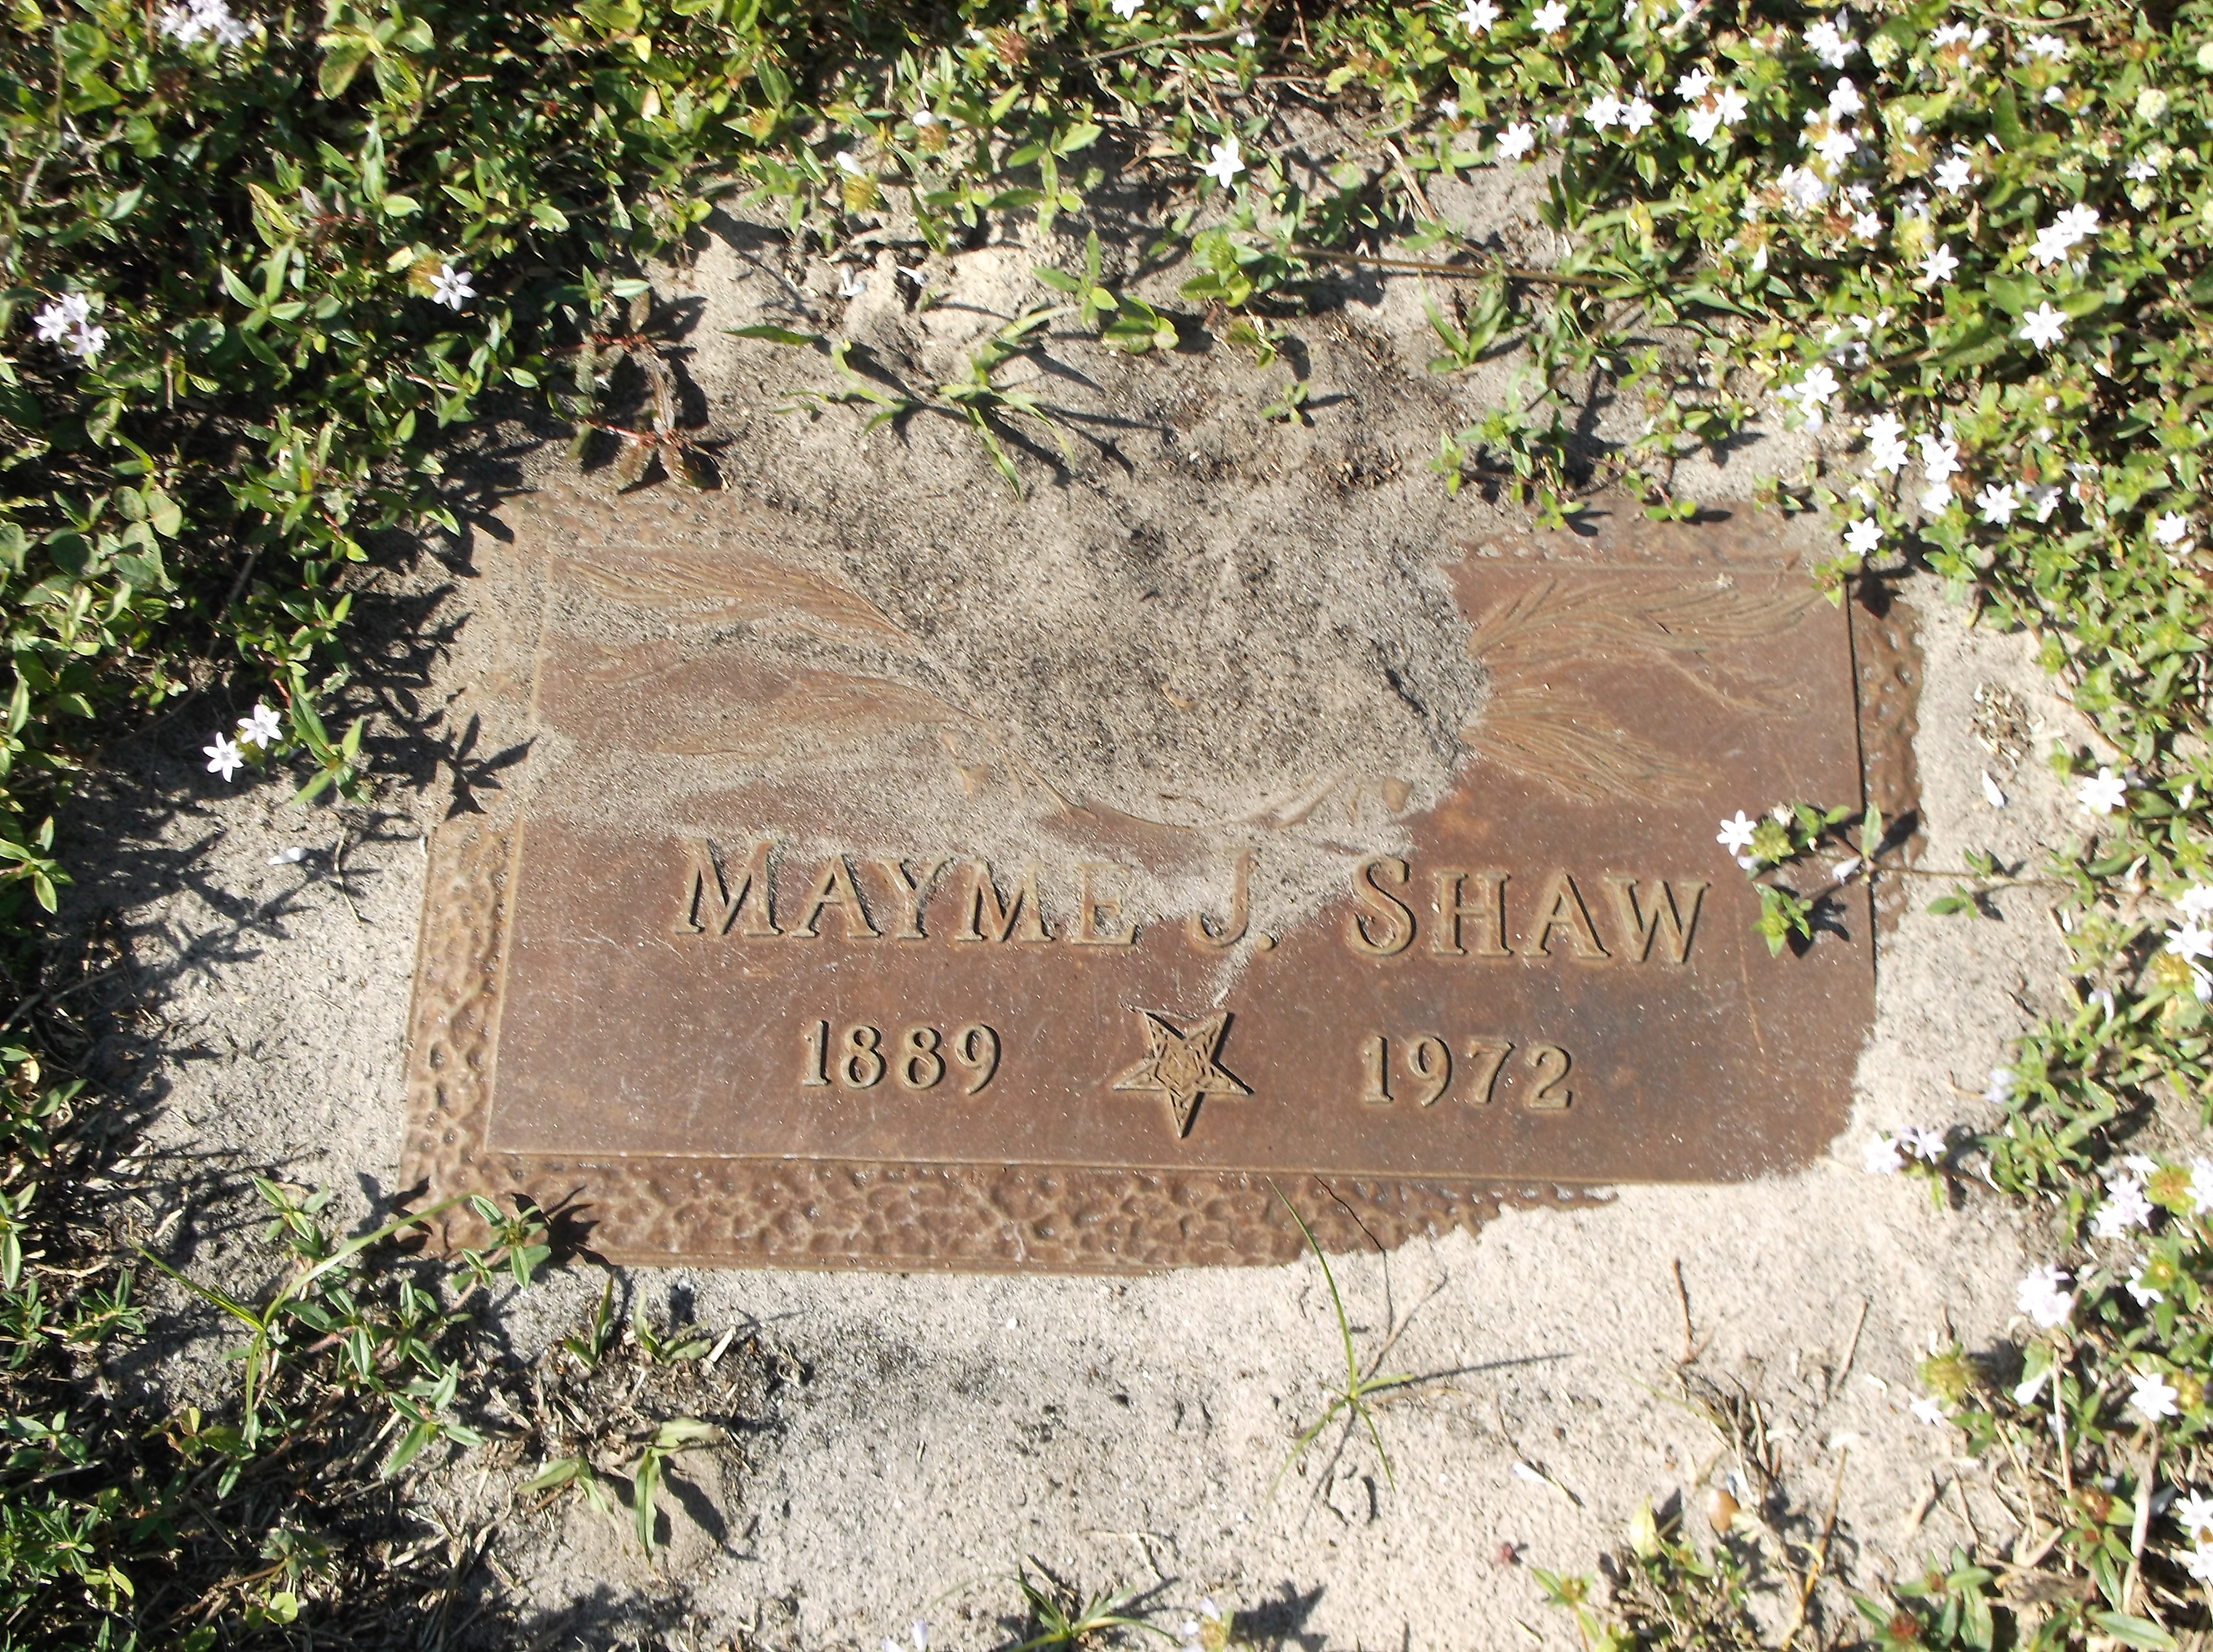 Mayme J Shaw